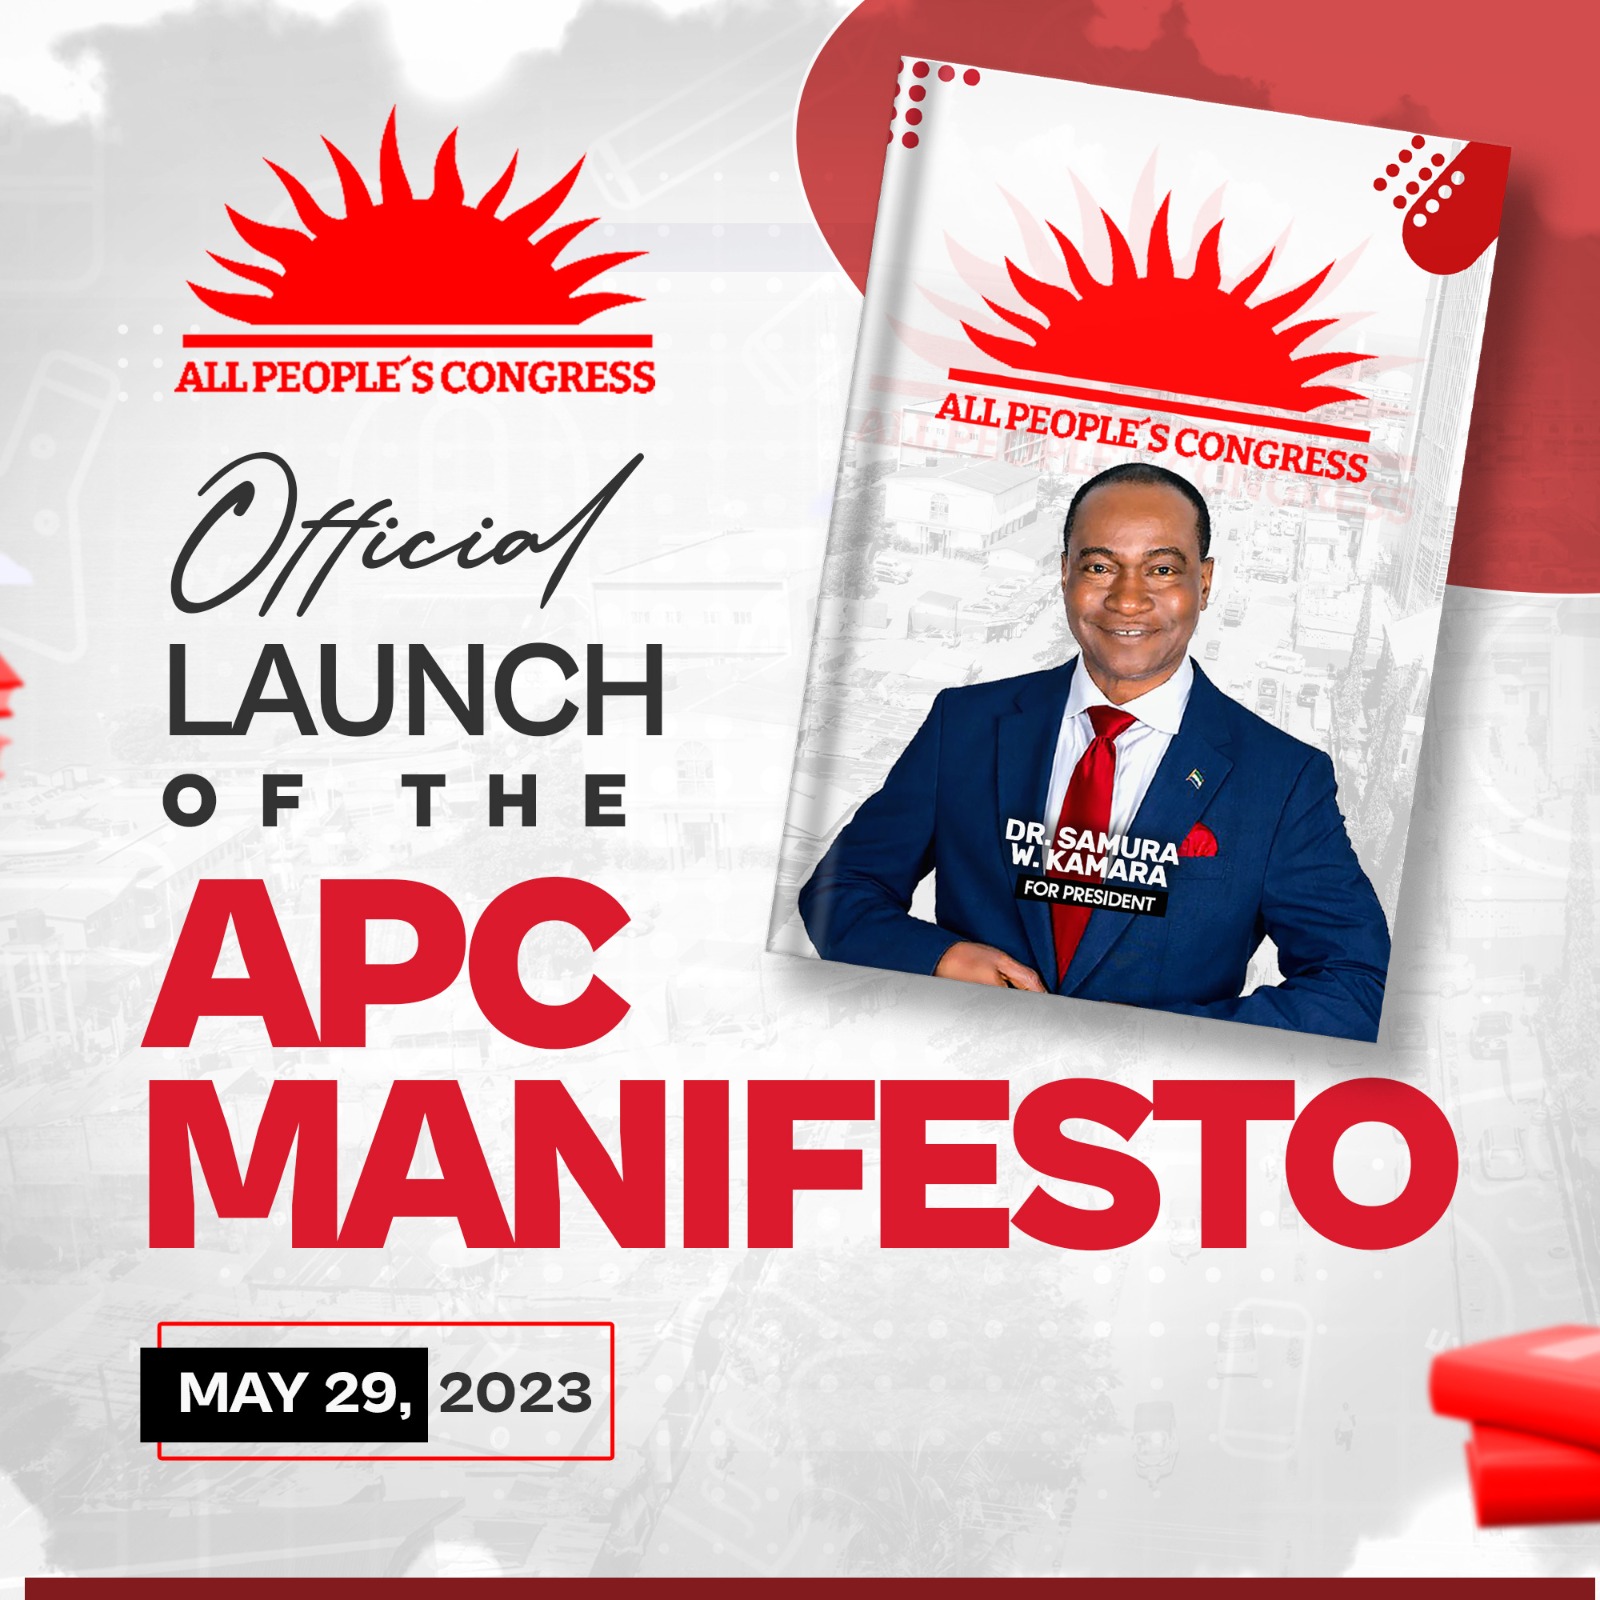 APC unveils its Manifesto on Monday, May 29th, 2023.